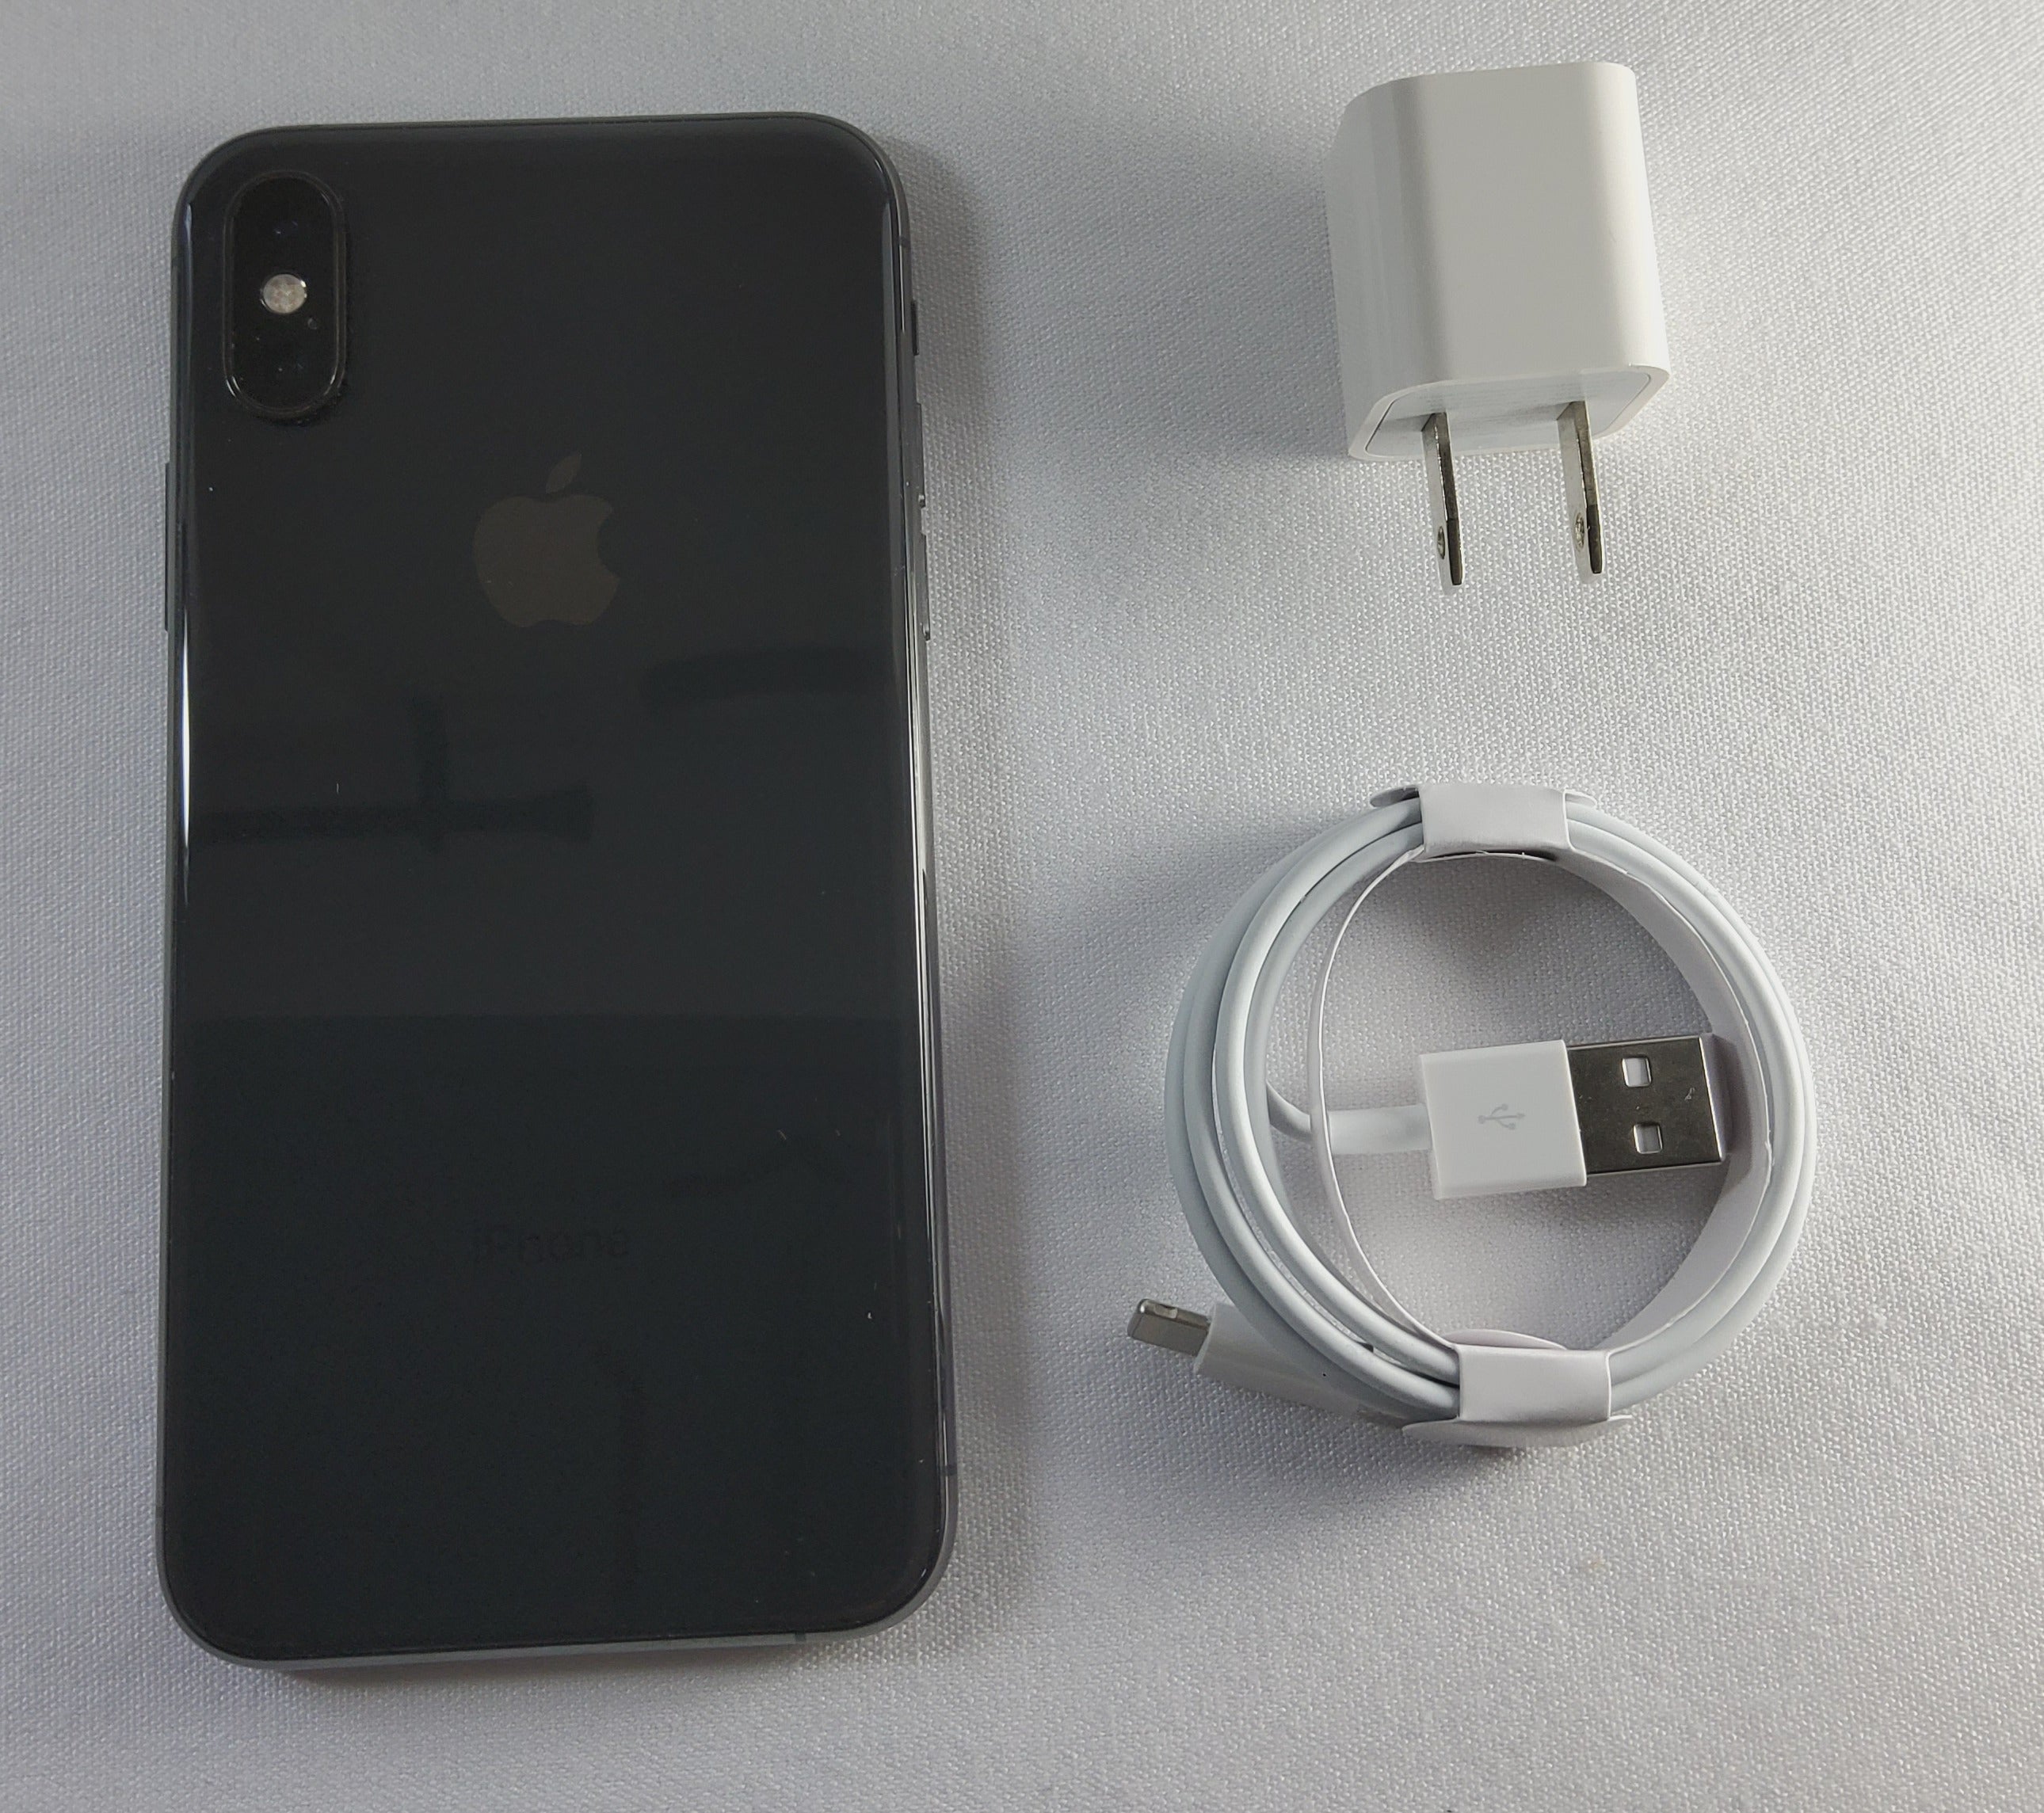 Apple iPhone XS (64GB) - Unlocked